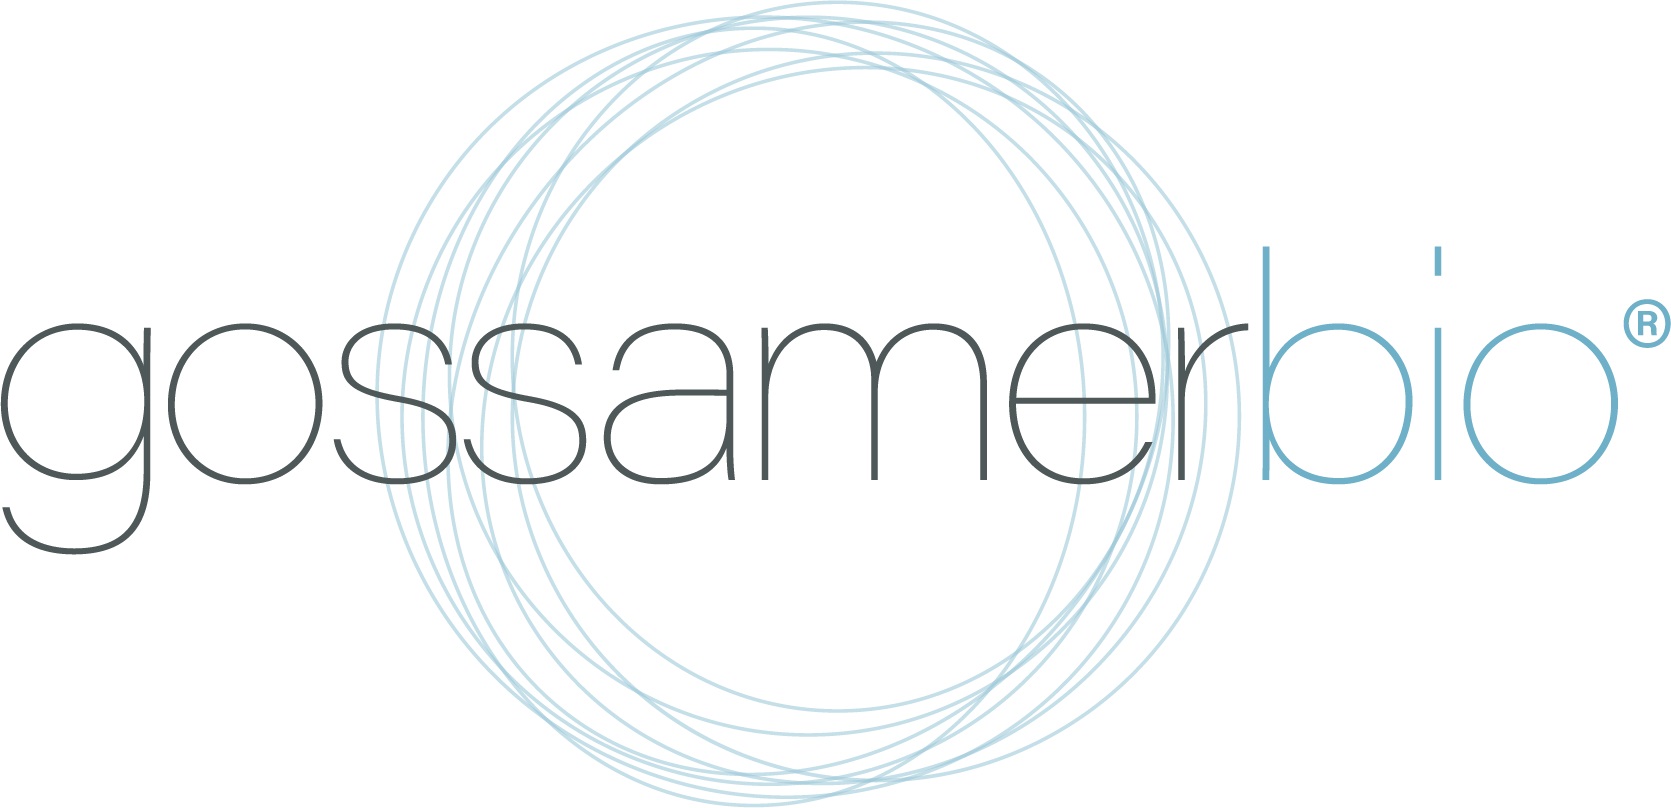 GossamerBio-Logo-Reg.jpg